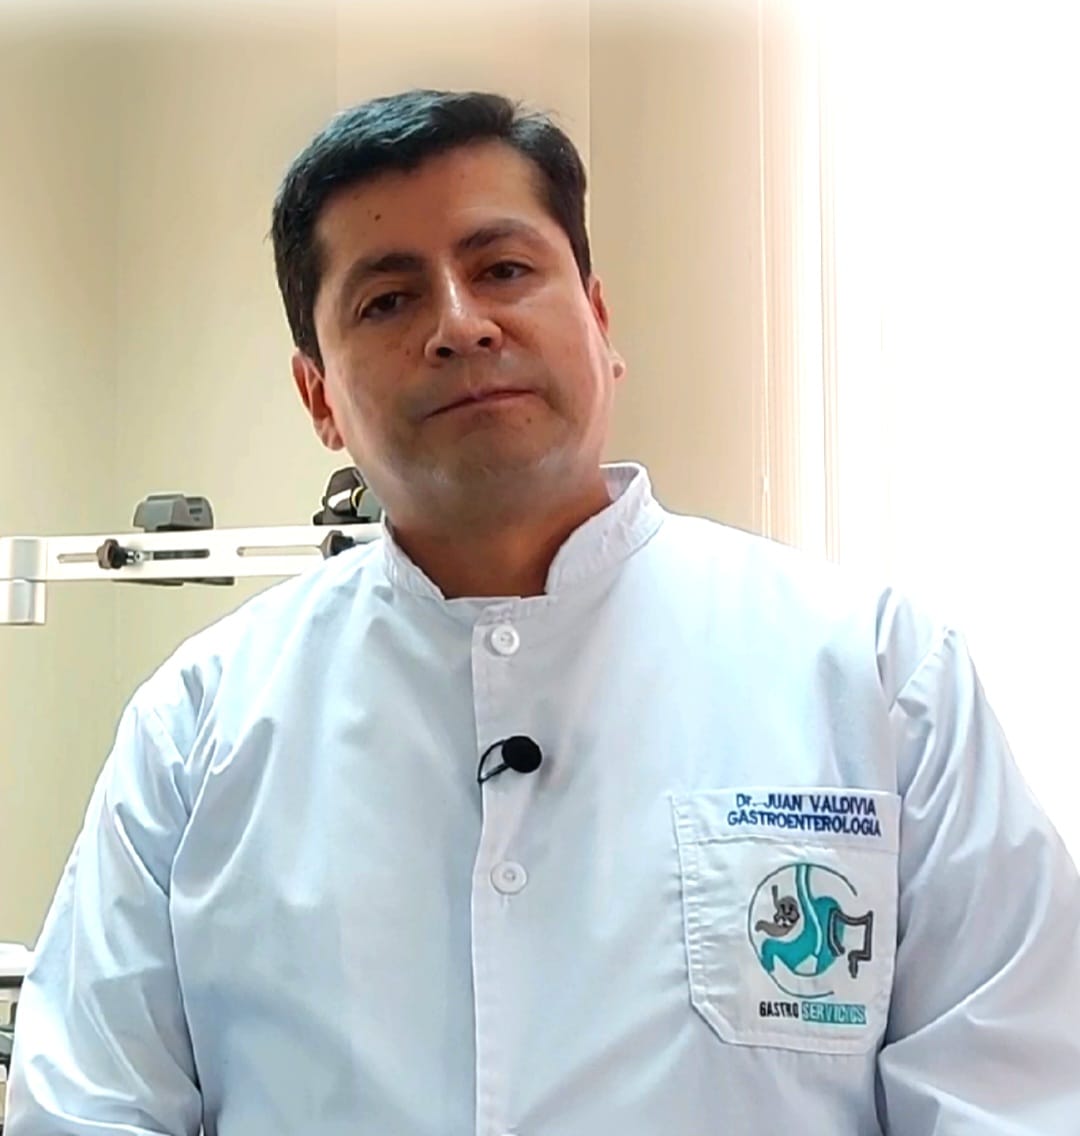 Dr. Juan Valdivia Gastroenterologo La Paz